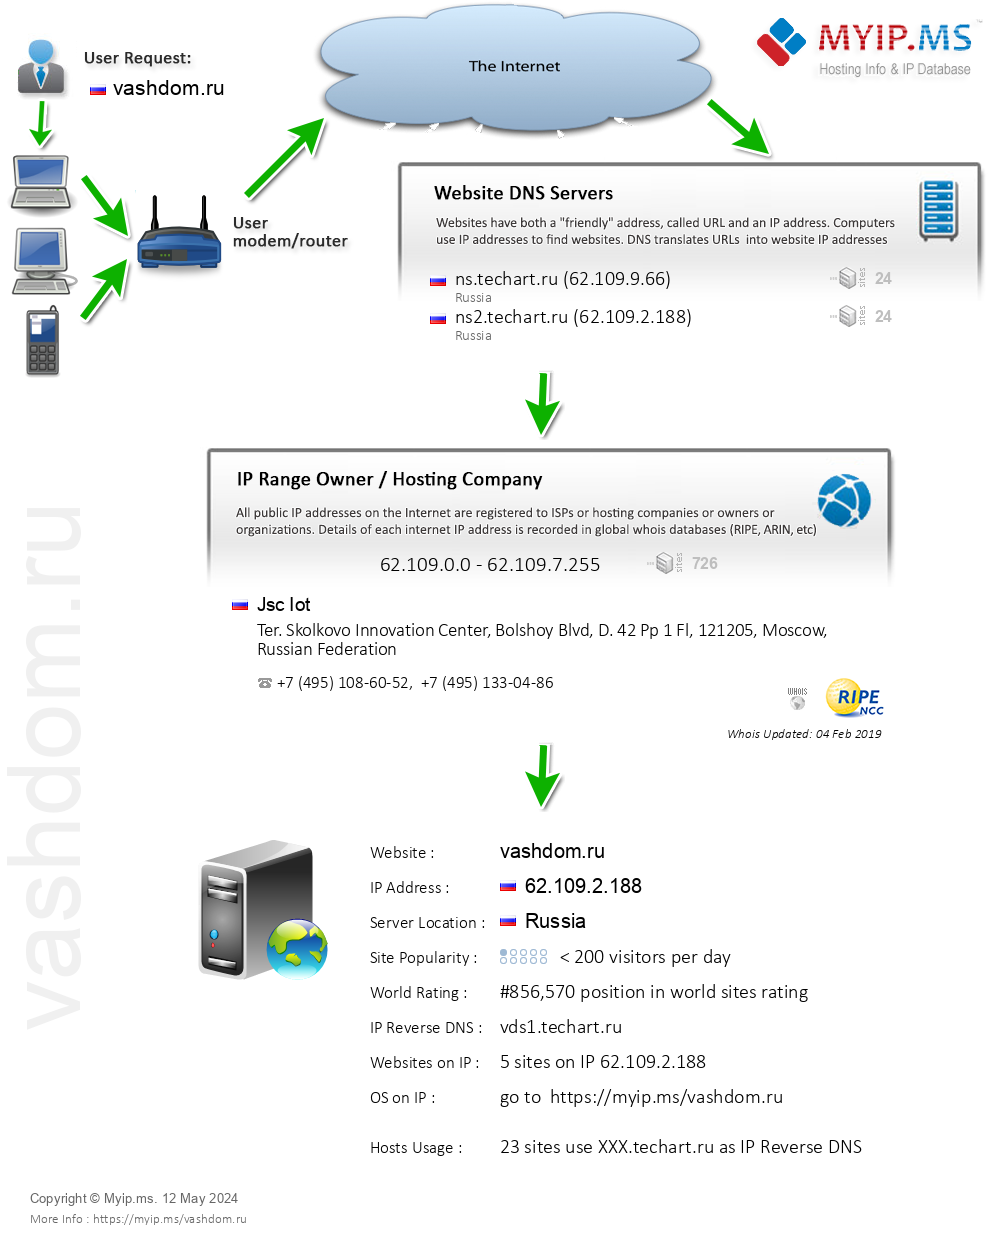 Vashdom.ru - Website Hosting Visual IP Diagram